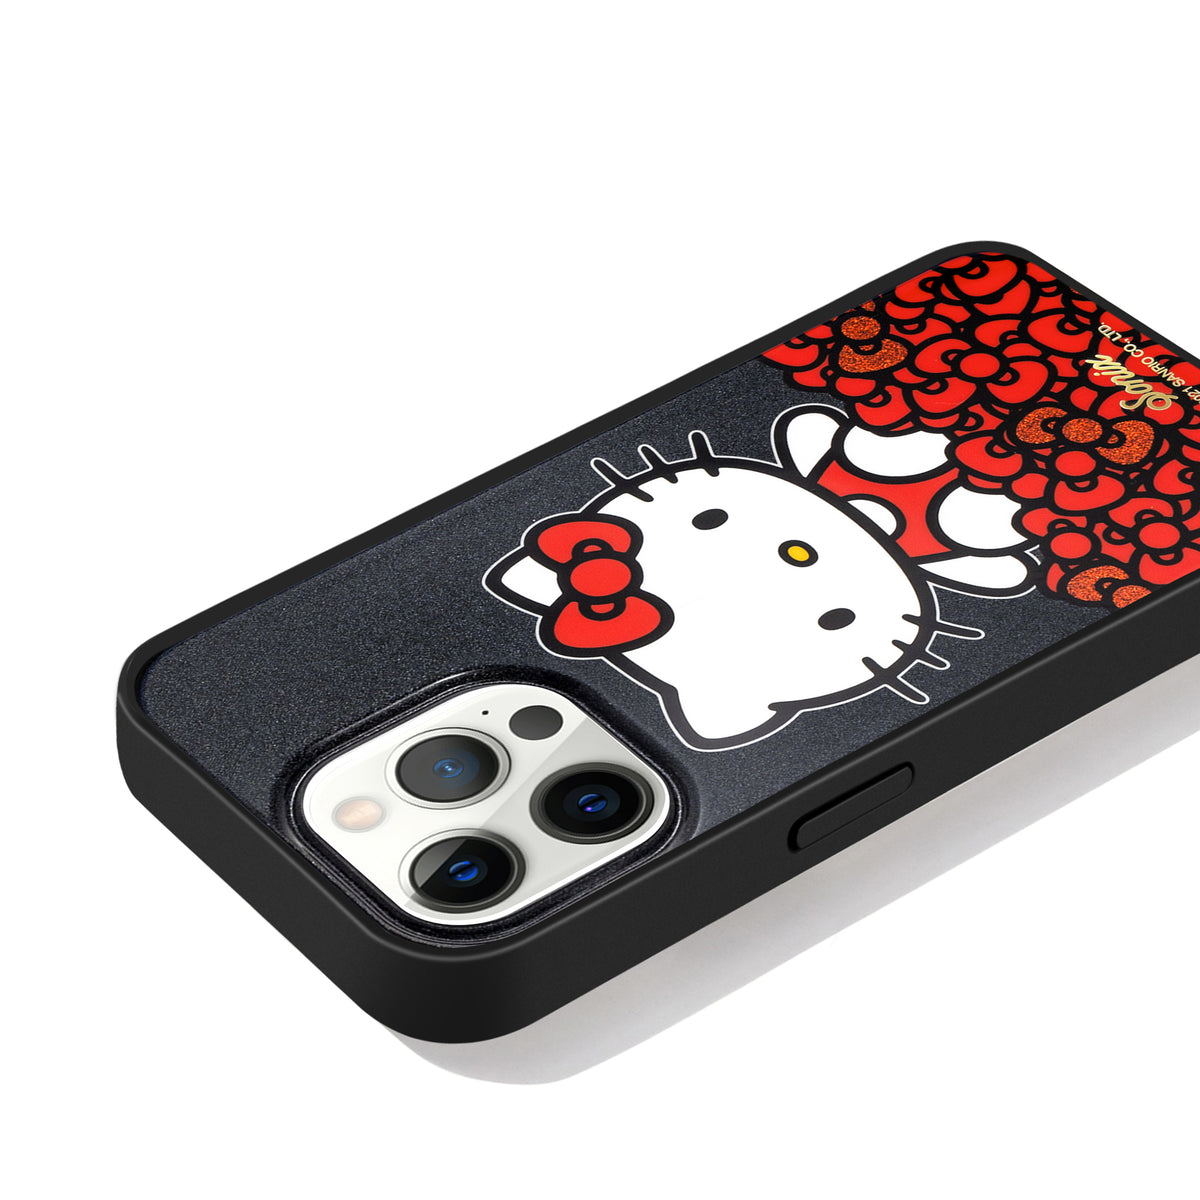  Sonix x Sanrio Case for iPhone 13 Pro